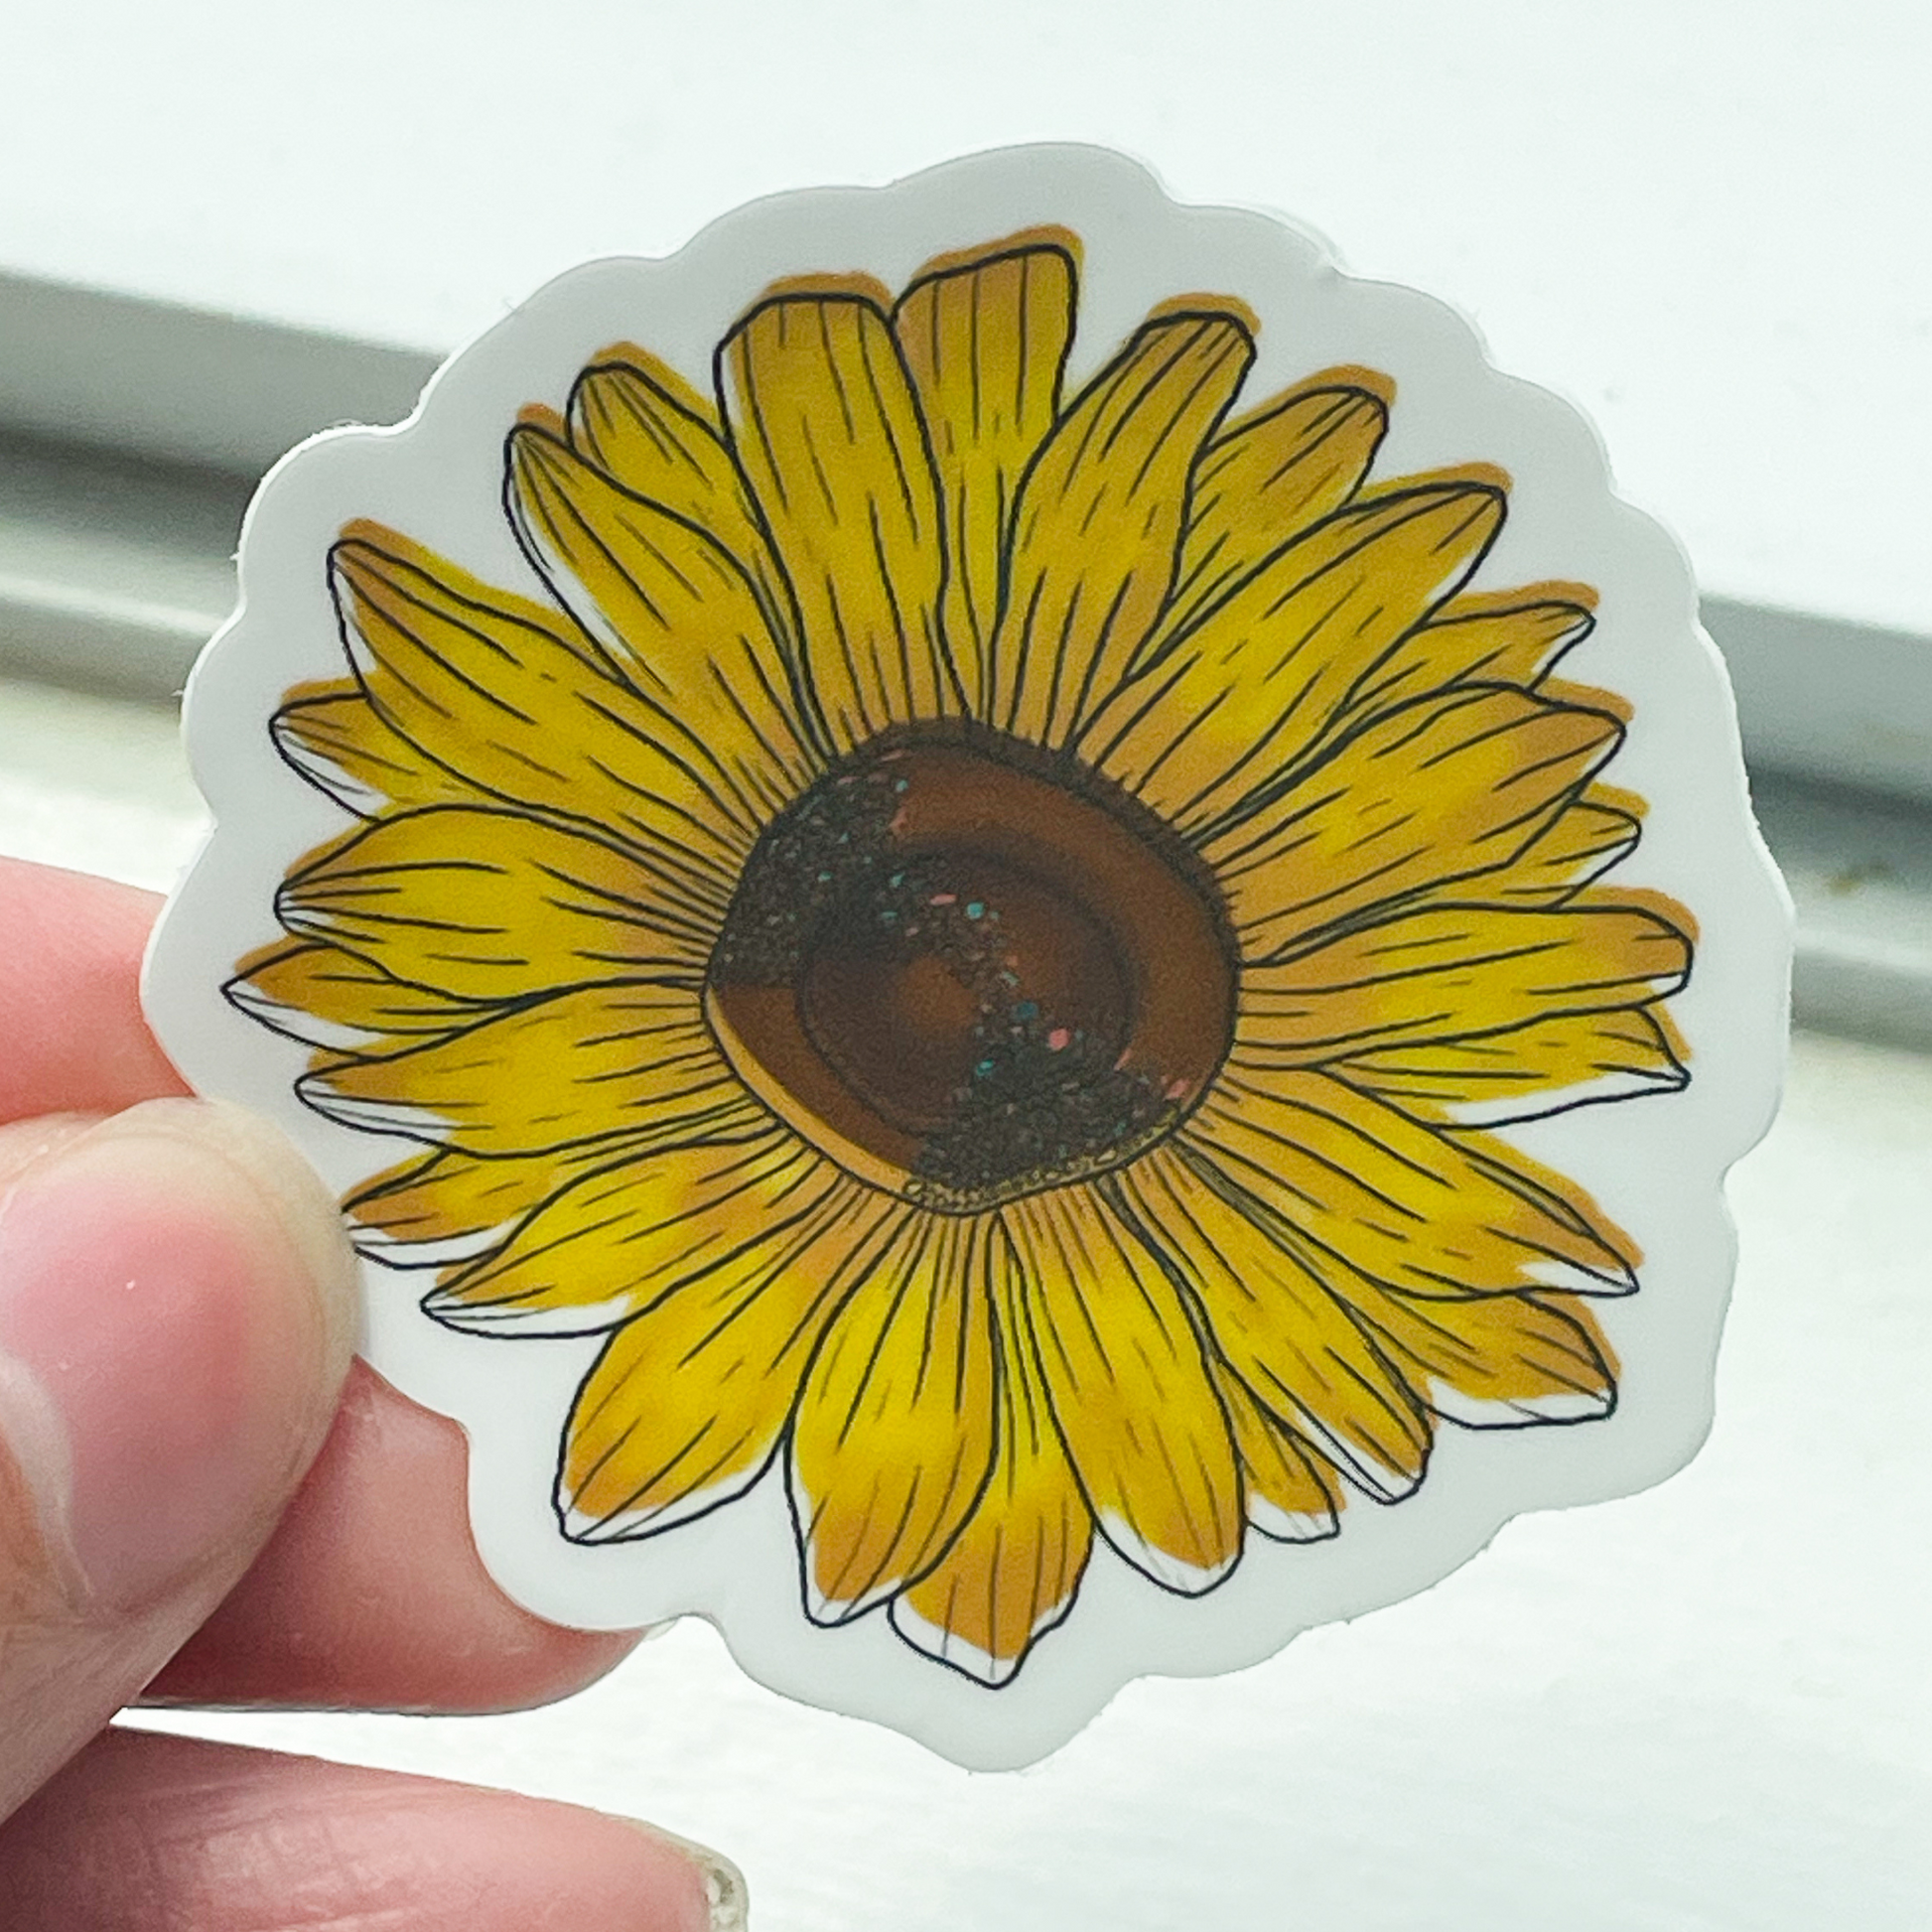 A hand holding a close up of a yellow sunflower sticker